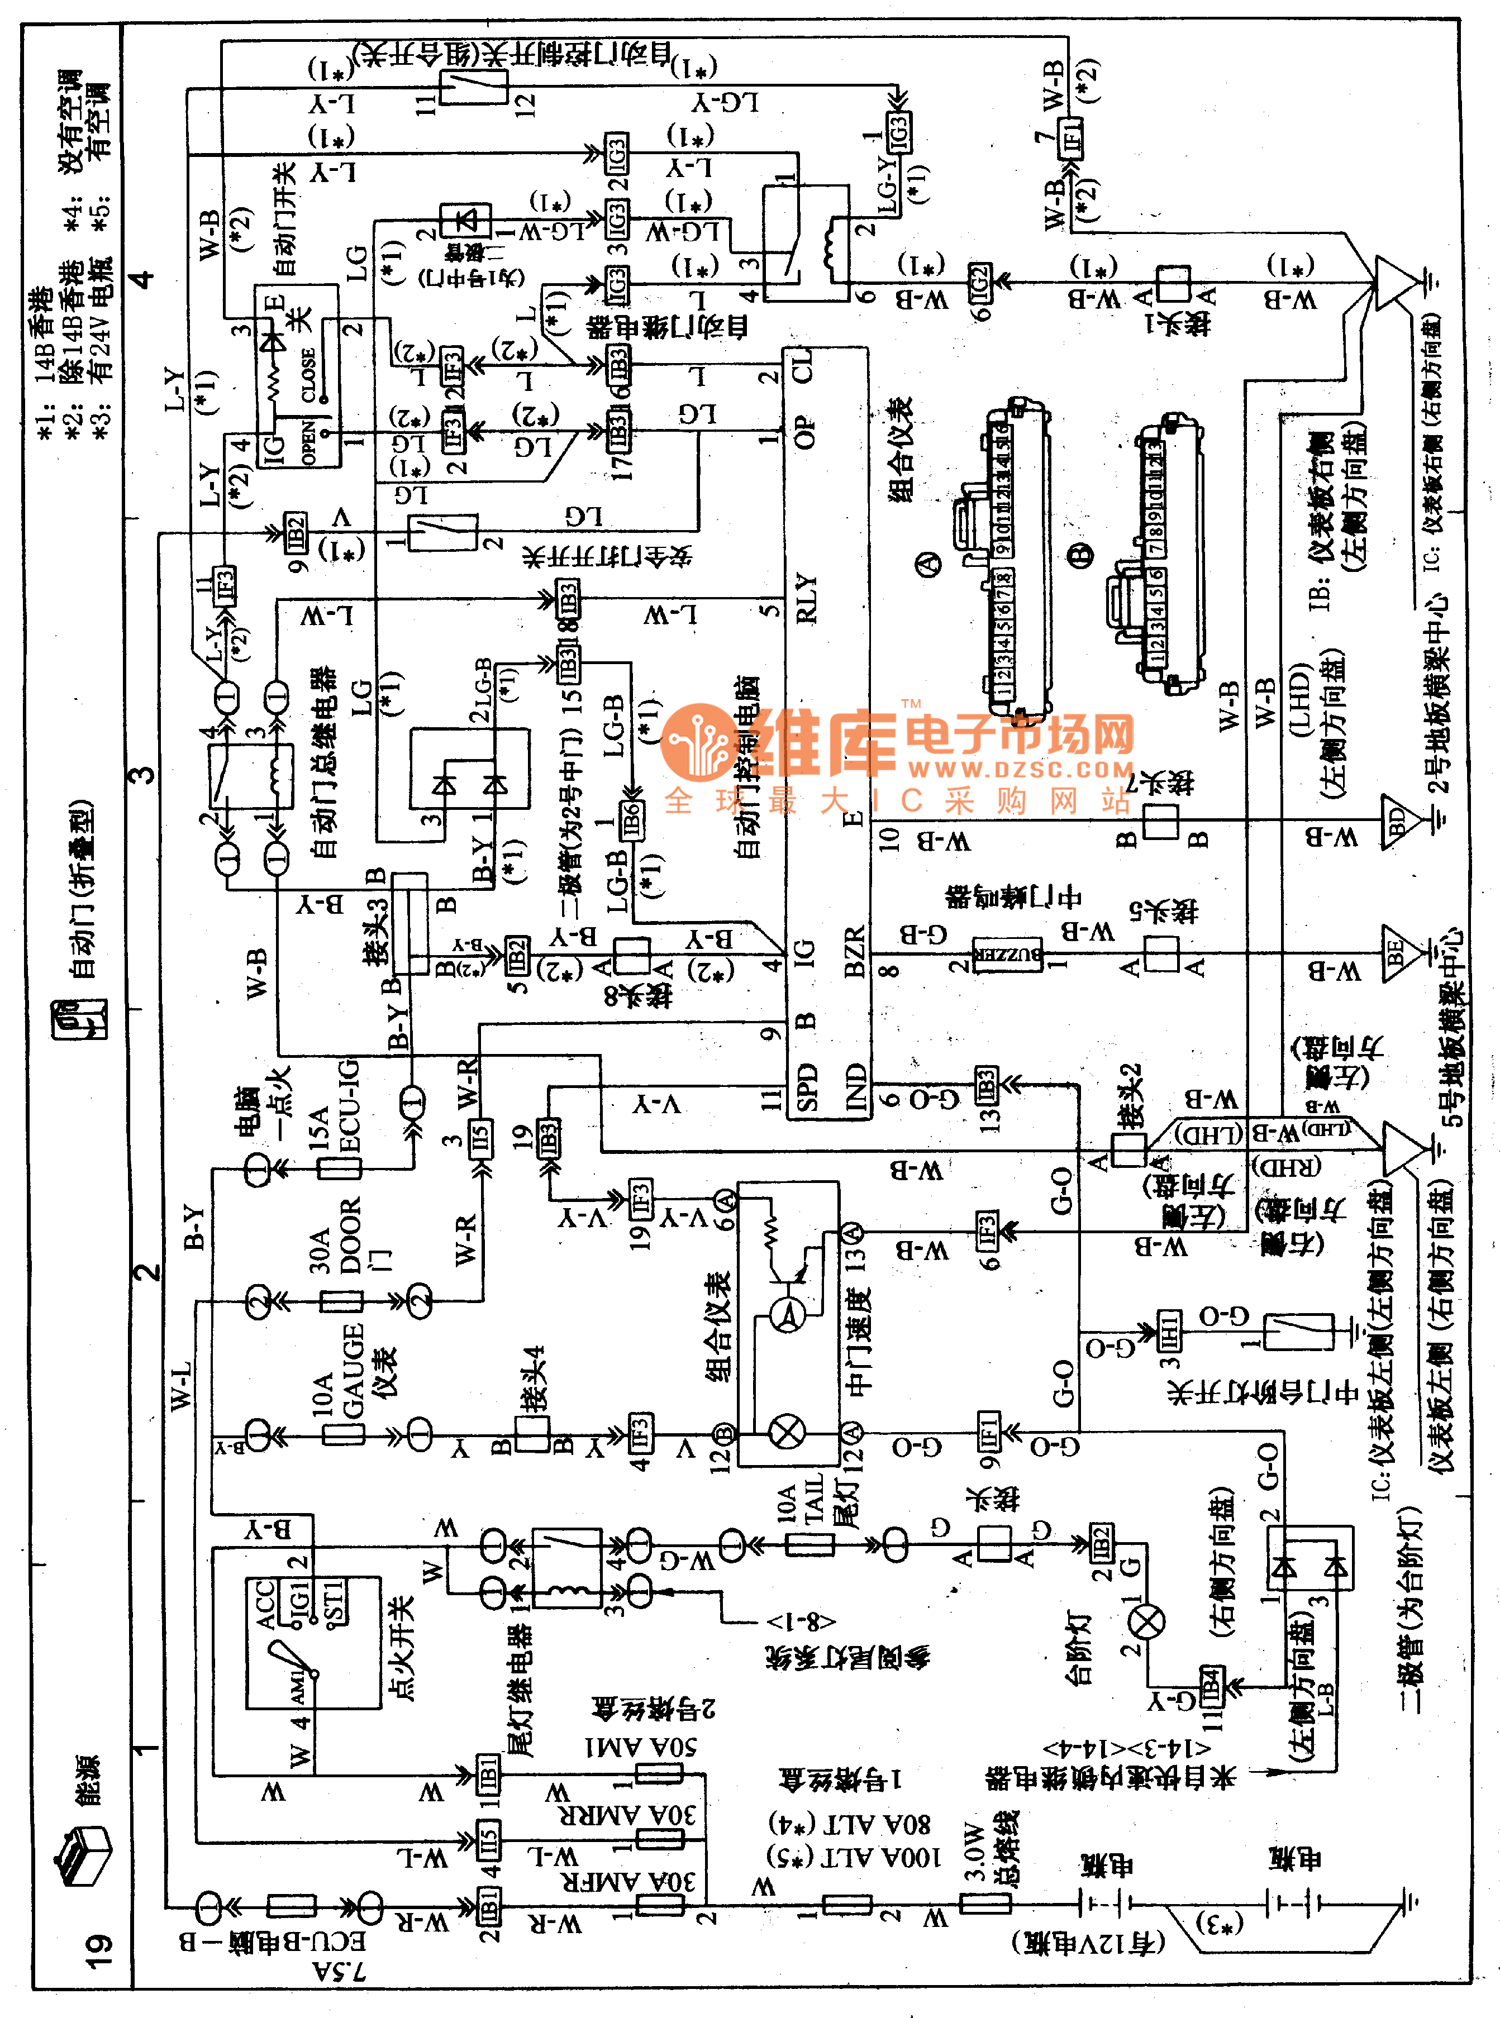 Toyota Coaster Wiring Diagram